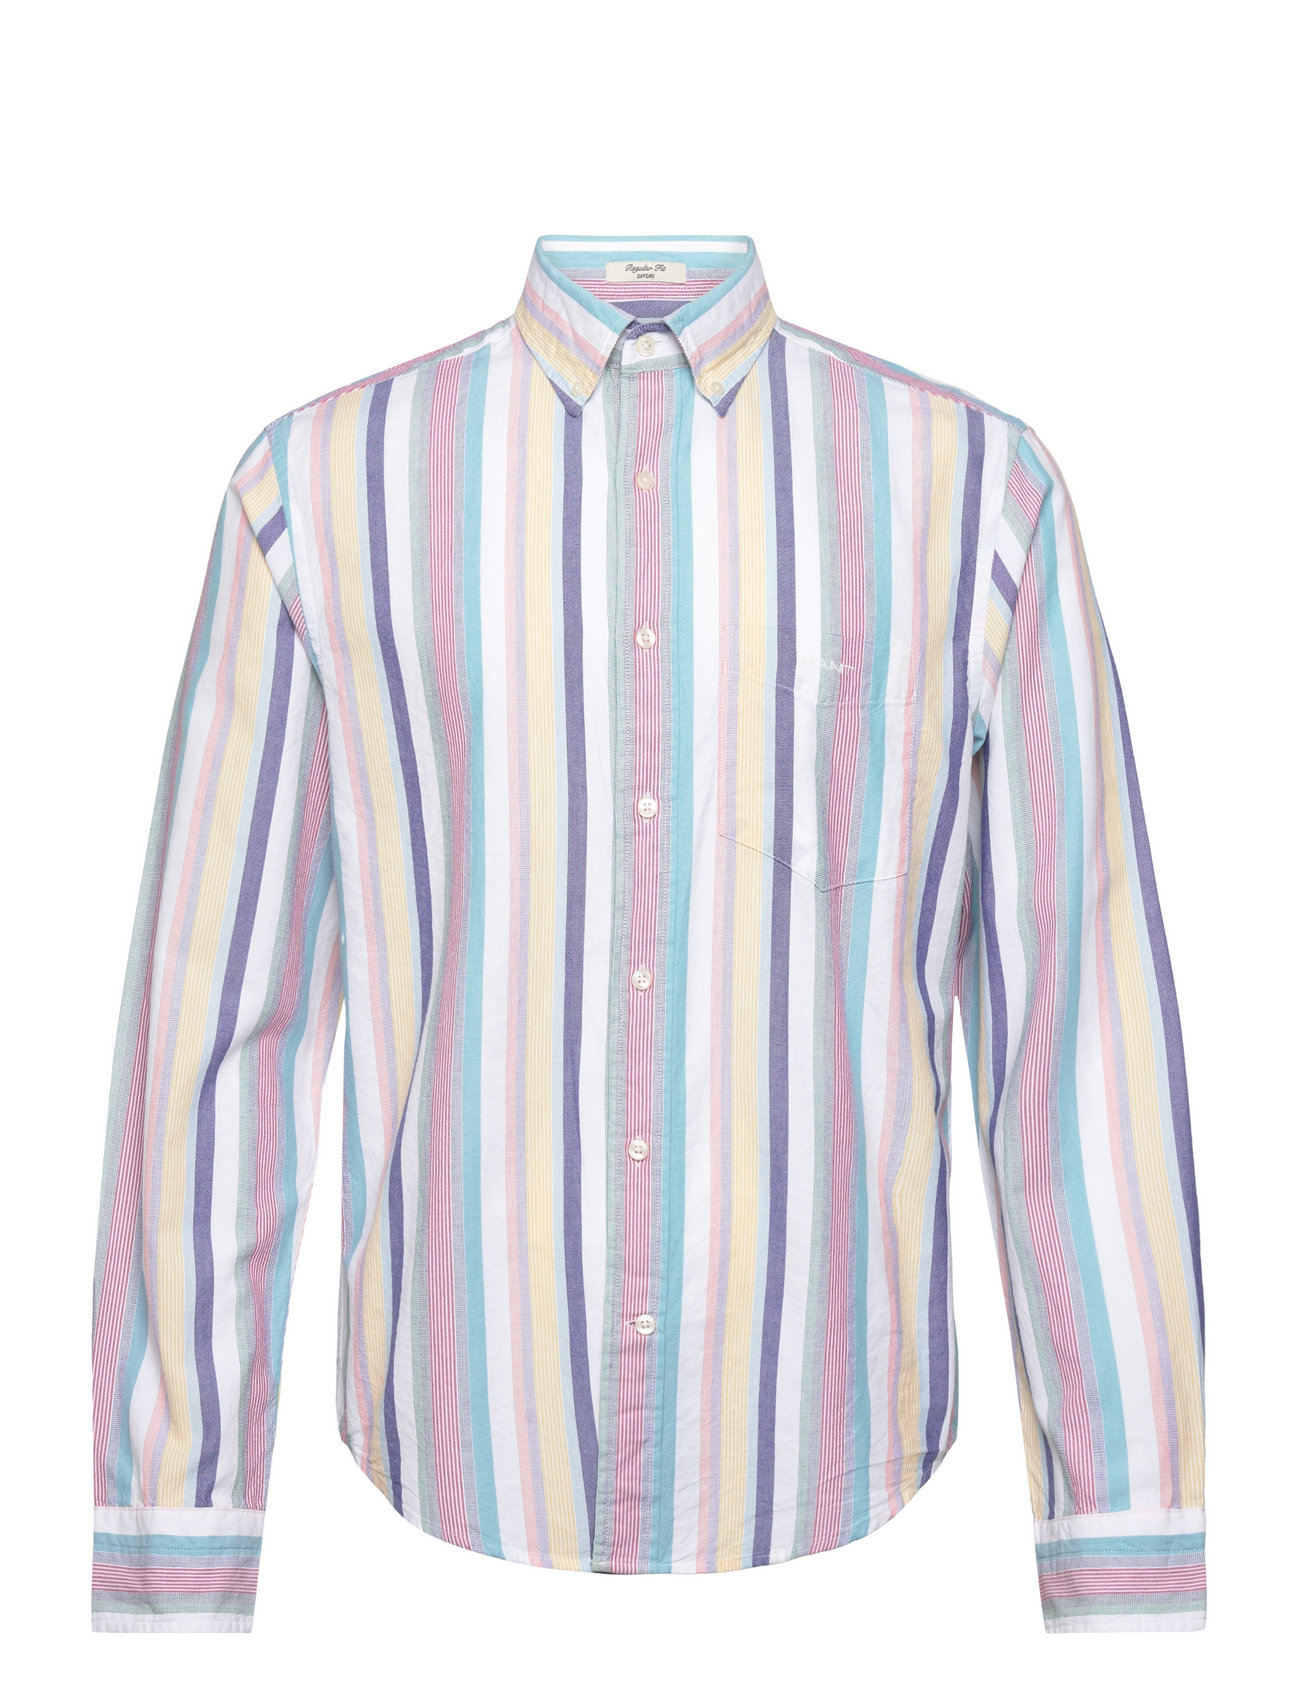 Reg Ut Oxford Multi Stripe Shirt Casual - Boozt.com